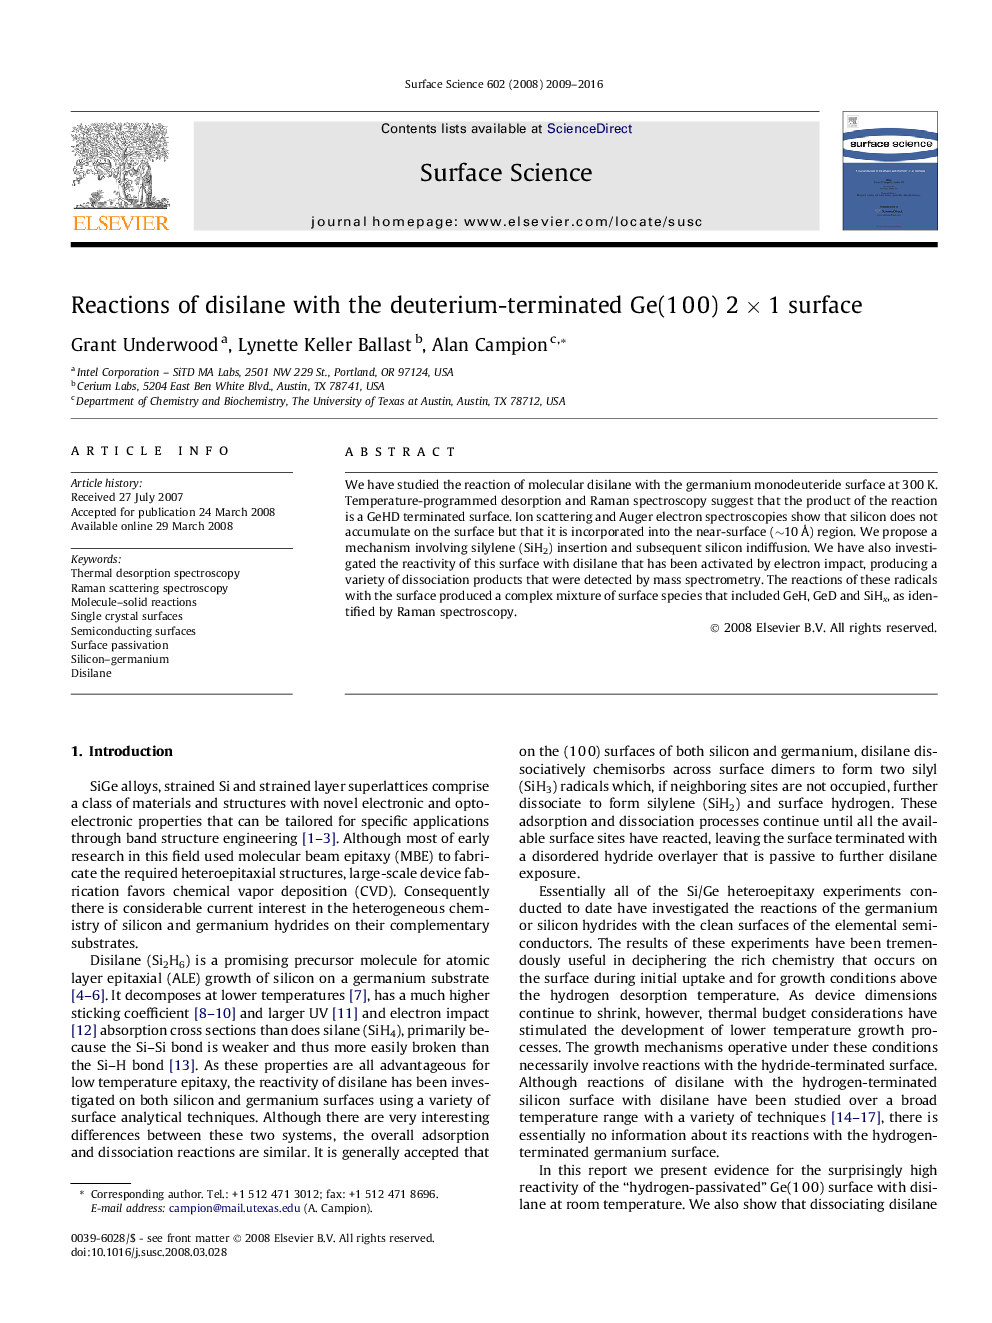 Reactions of disilane with the deuterium-terminated Ge(1Â 0Â 0) 2Â ÃÂ 1 surface